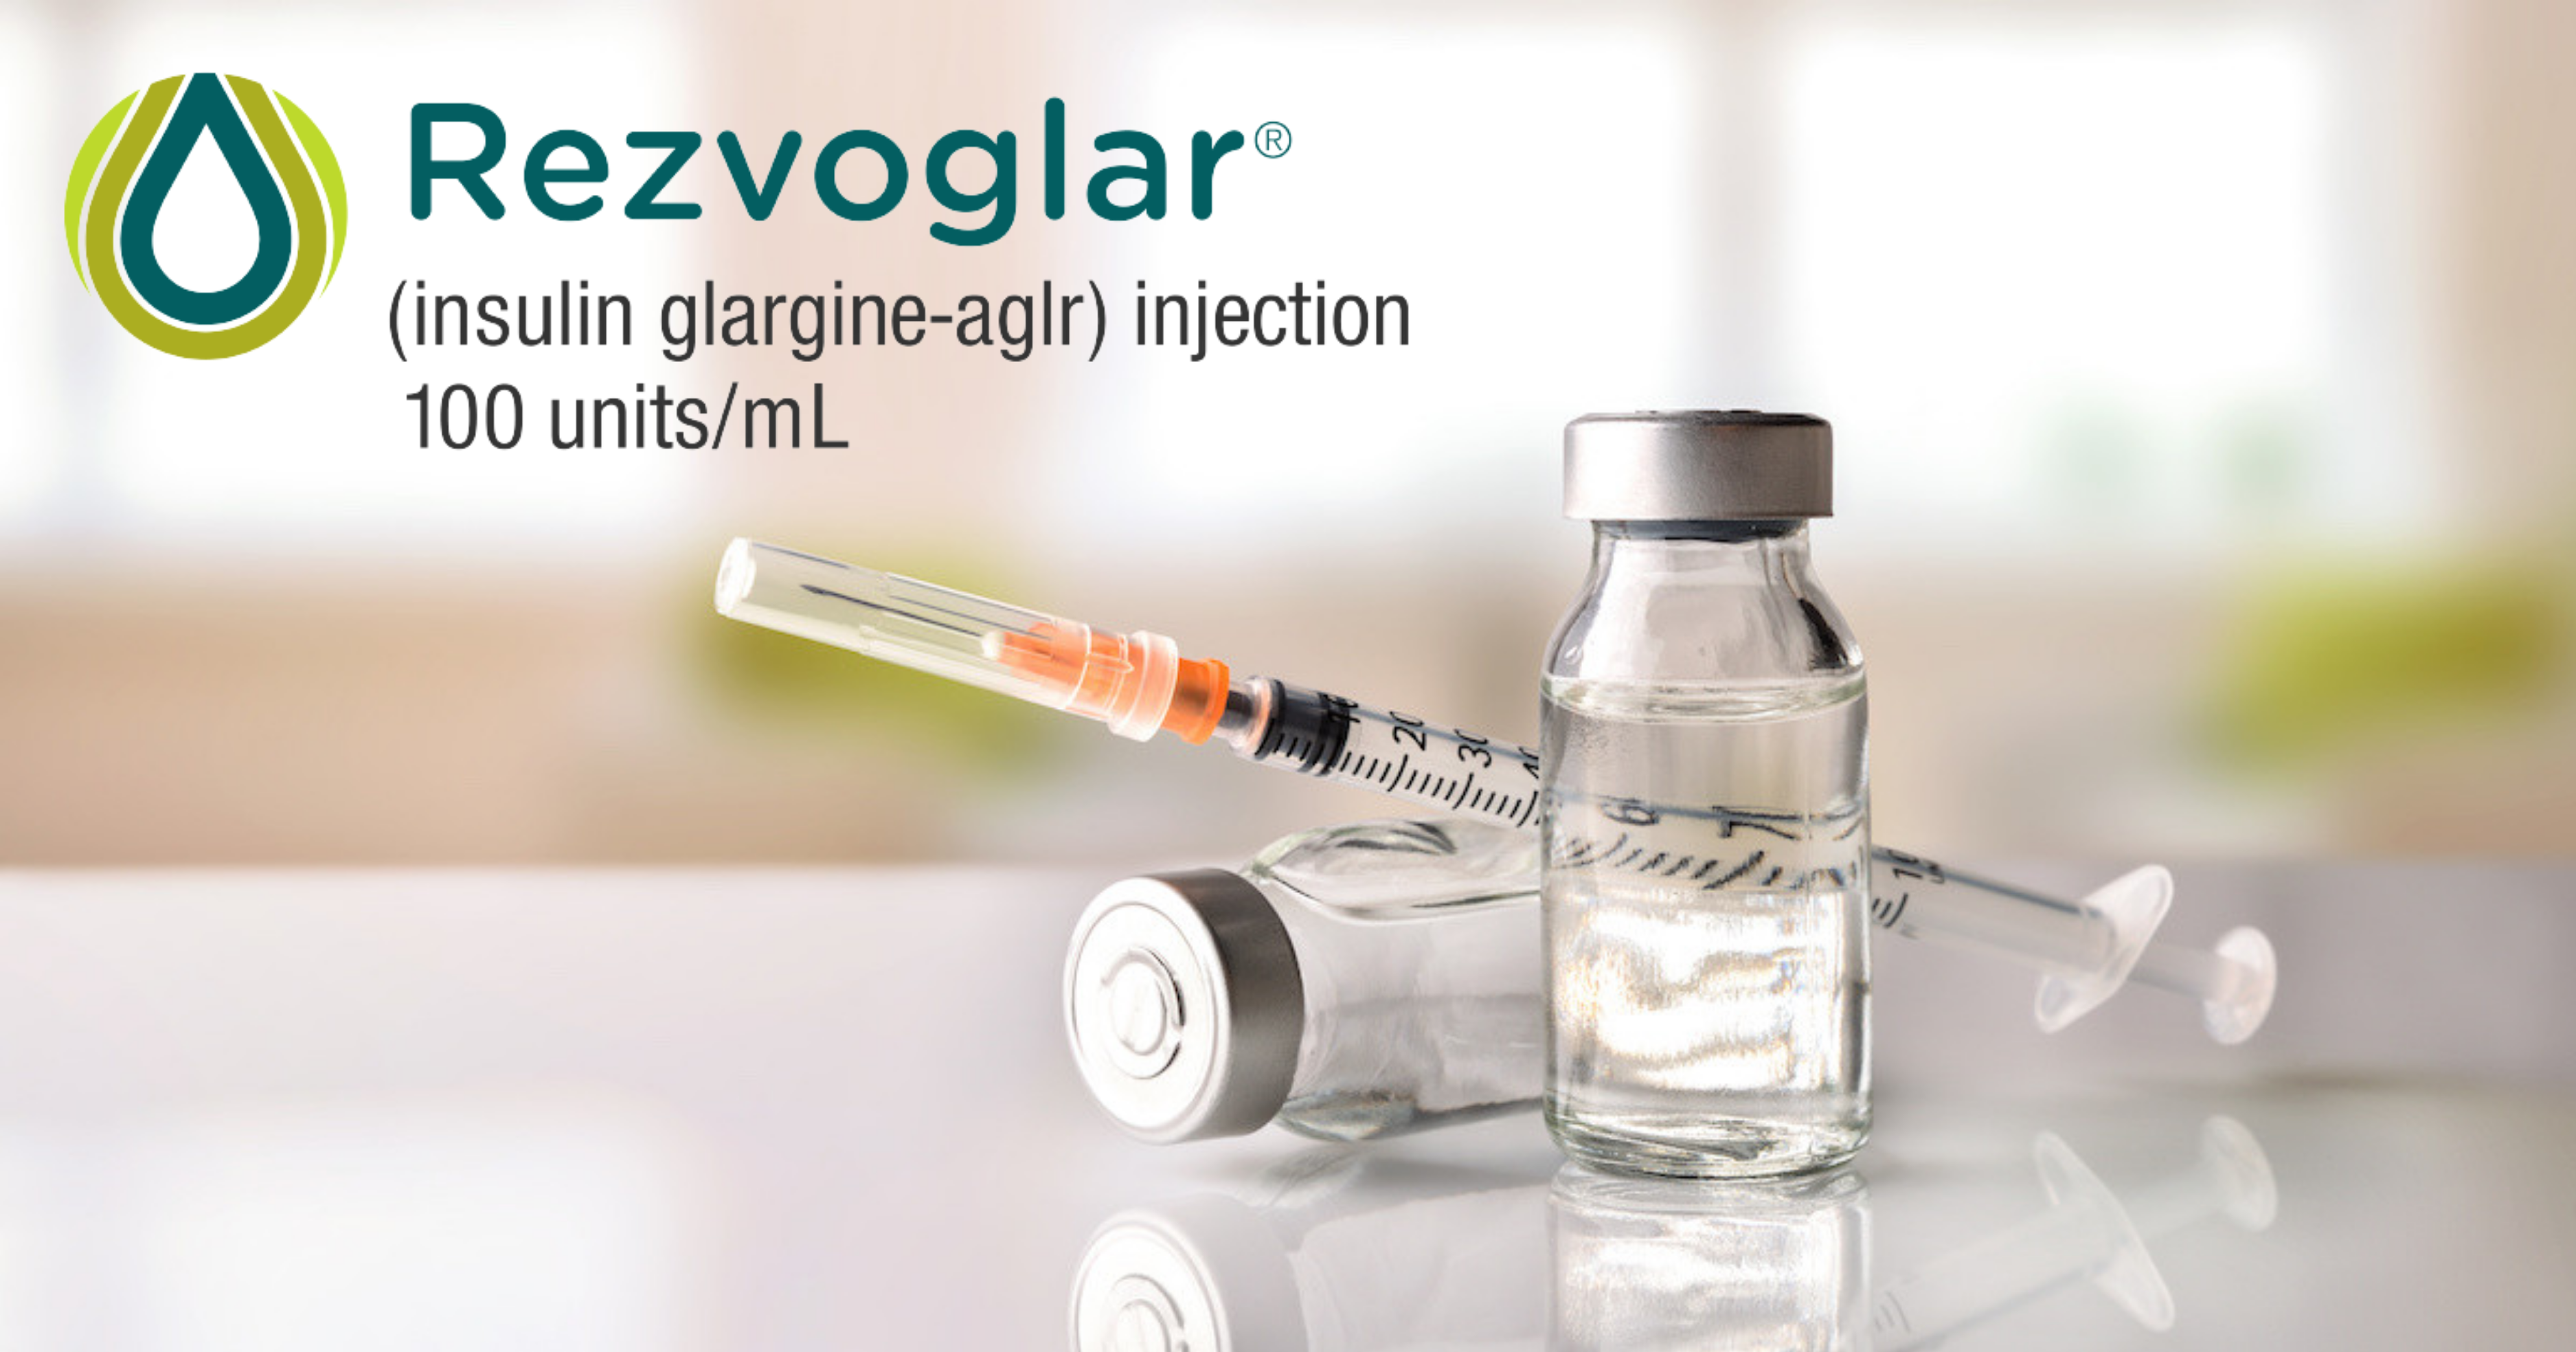 Pre-filled syringe with vials and Rezvoglar logo | Image credit: Davizro Photography - stock.adobe.com.